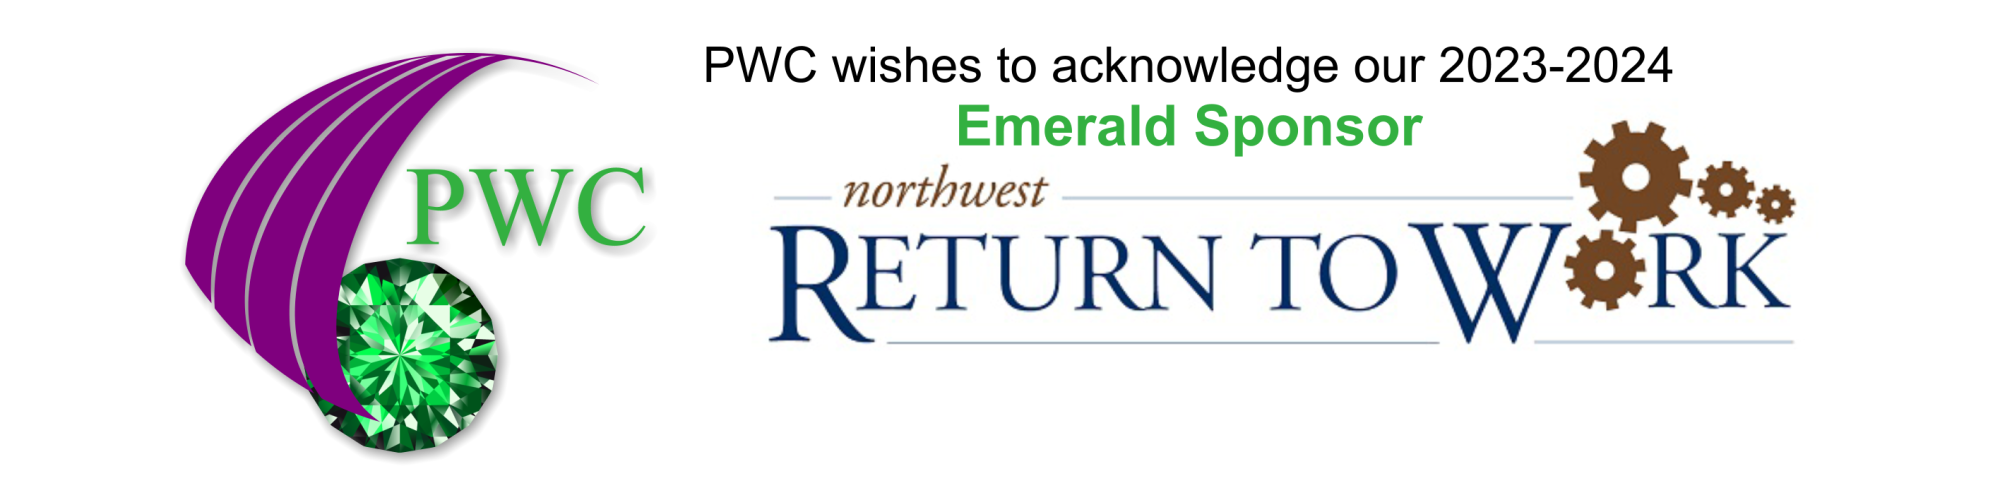 emerald NWRTW banner 1